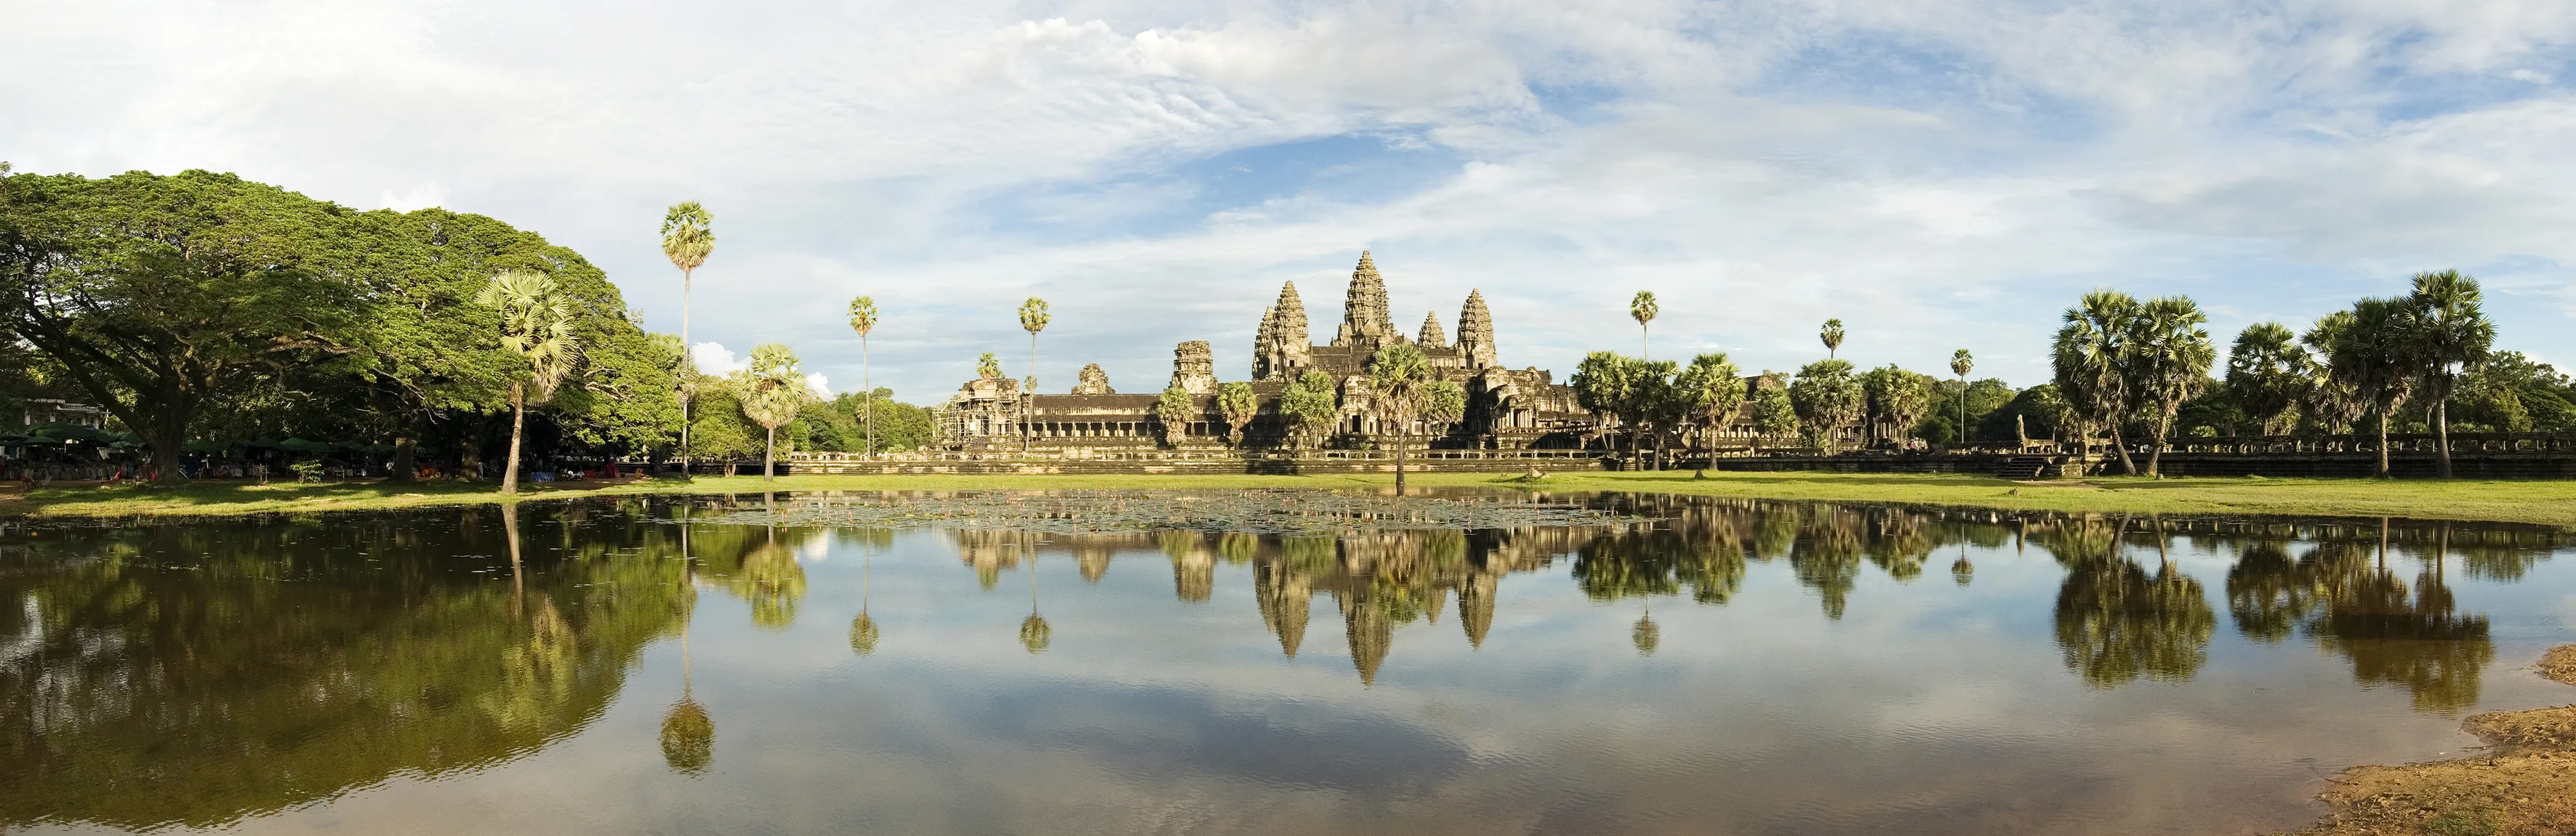 Angkor Vat au Cambodge 